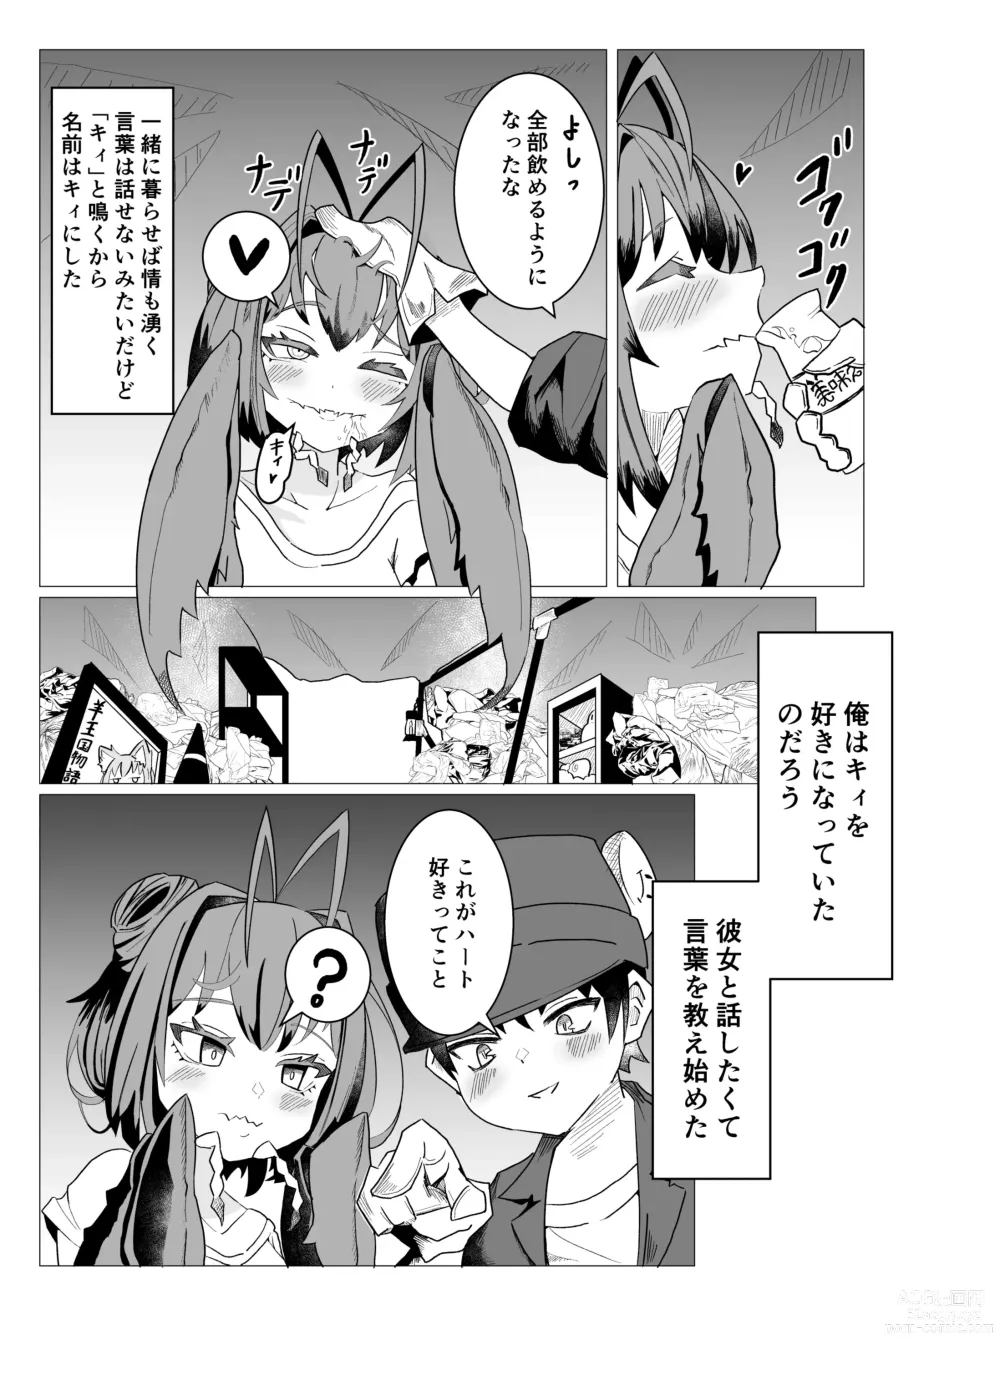 Page 7 of doujinshi kama1JPG